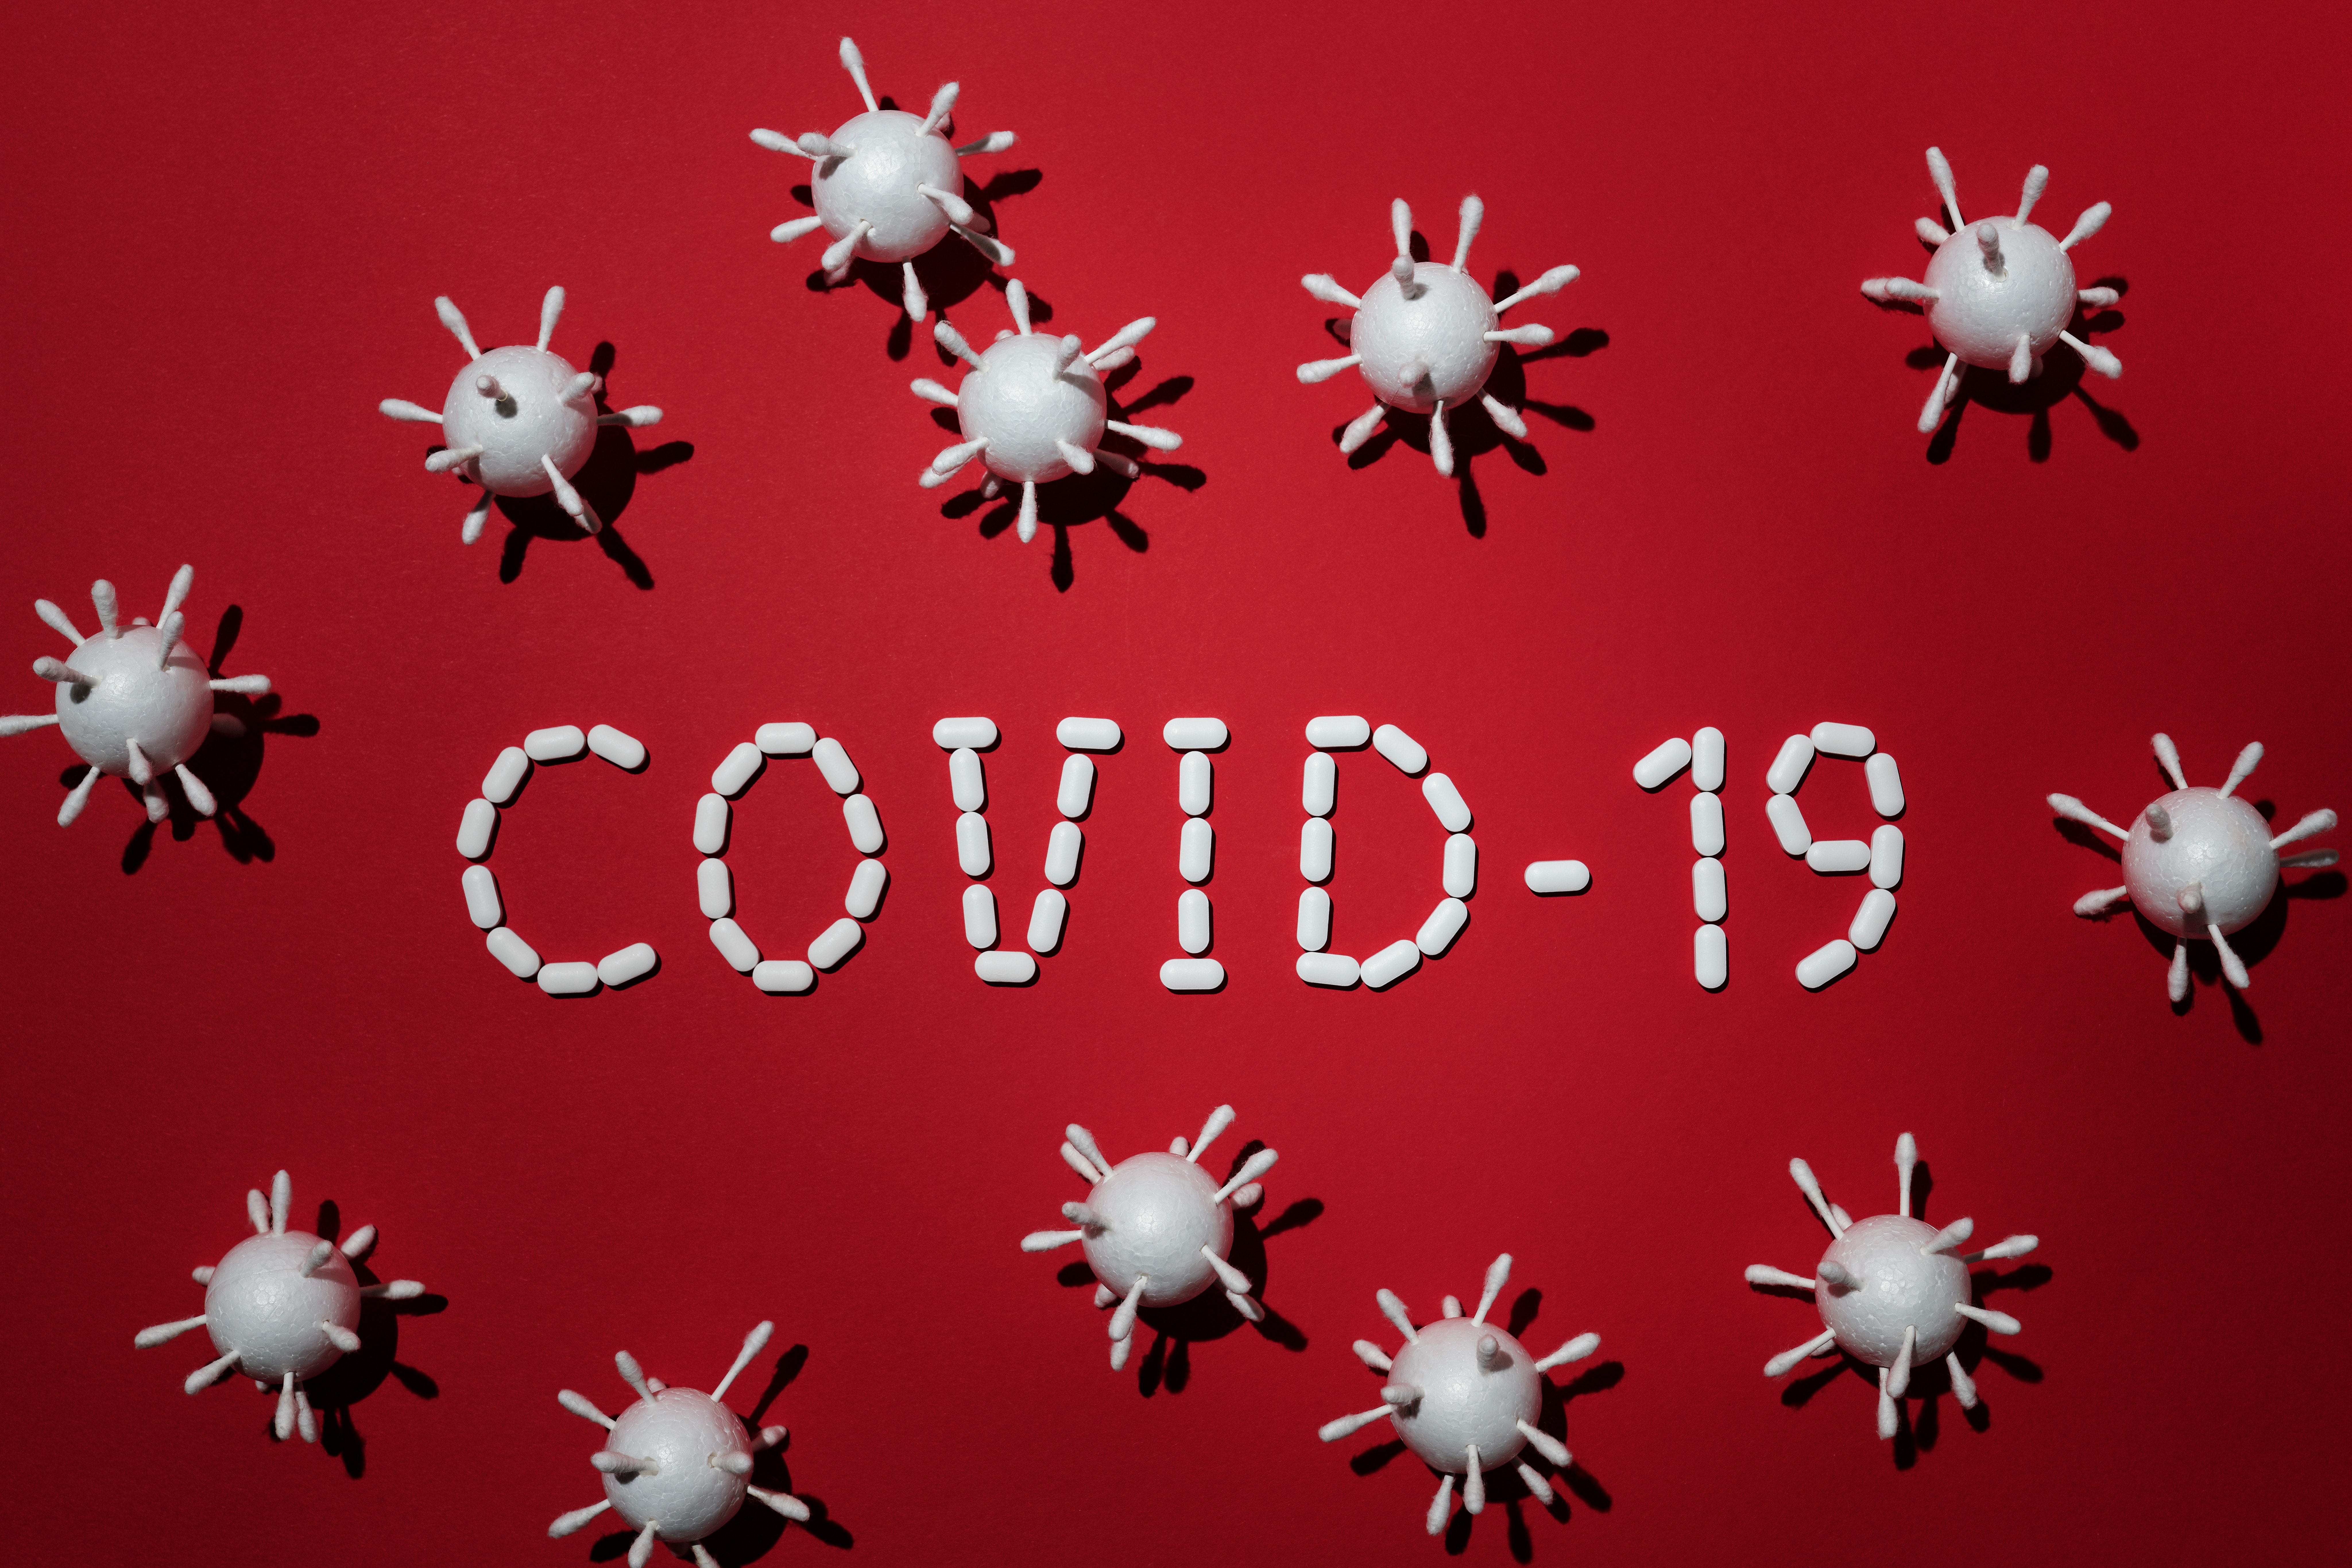 COVID-19 Massacre on Nonprofits